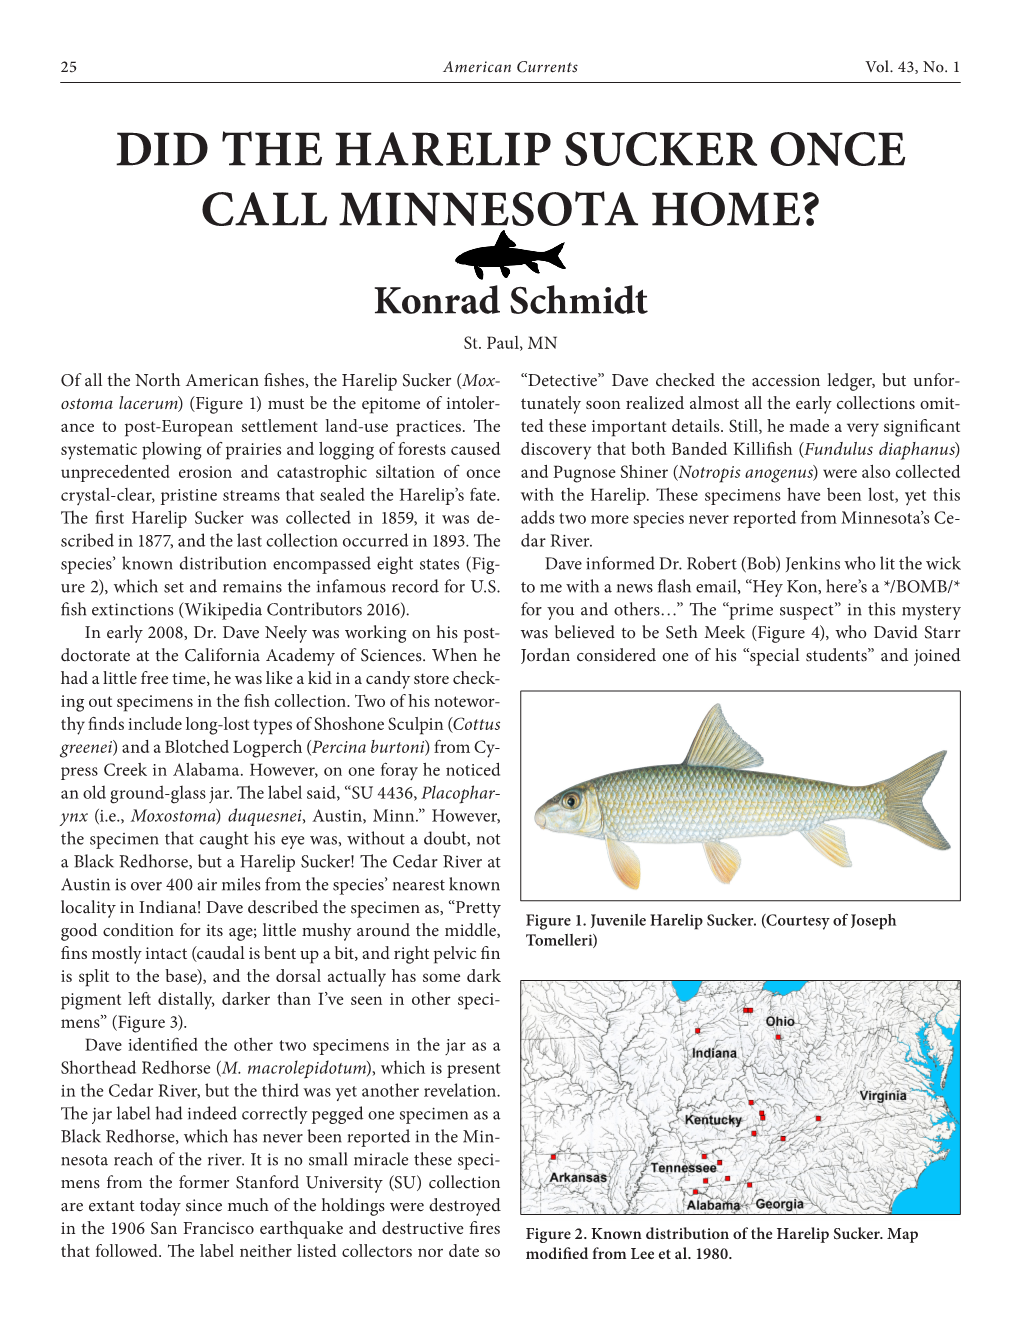 Did the Harelip Sucker Once Call Minnesota Home? Konrad Schmidt